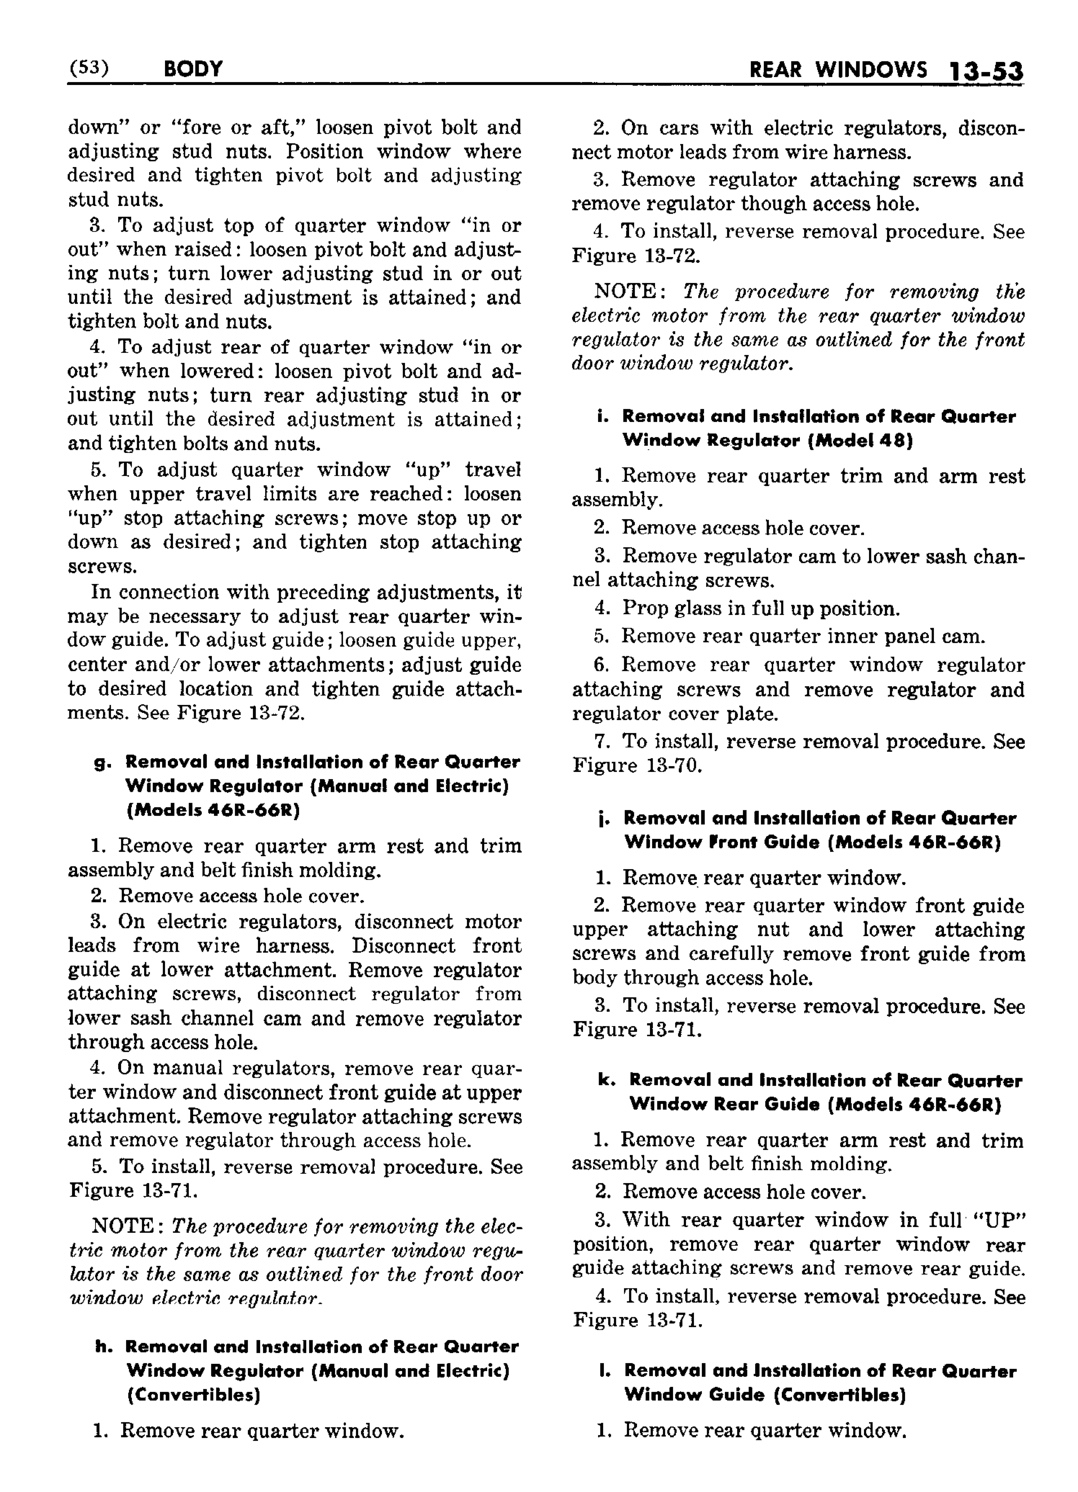 n_1958 Buick Body Service Manual-054-054.jpg